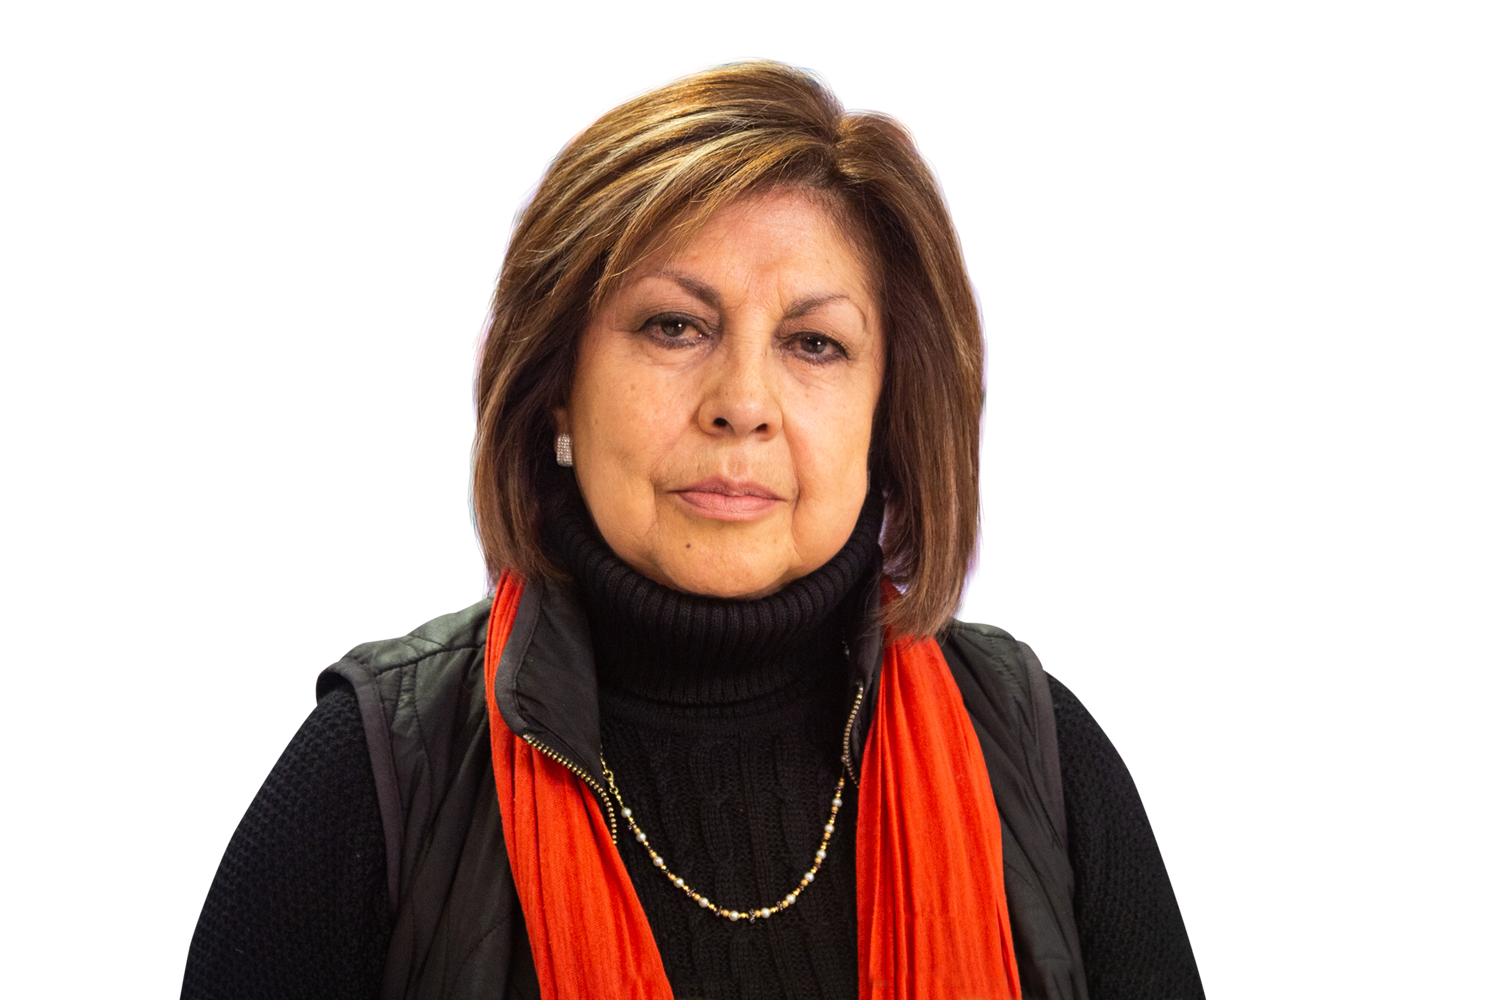 Cecilia Orozco Tascón